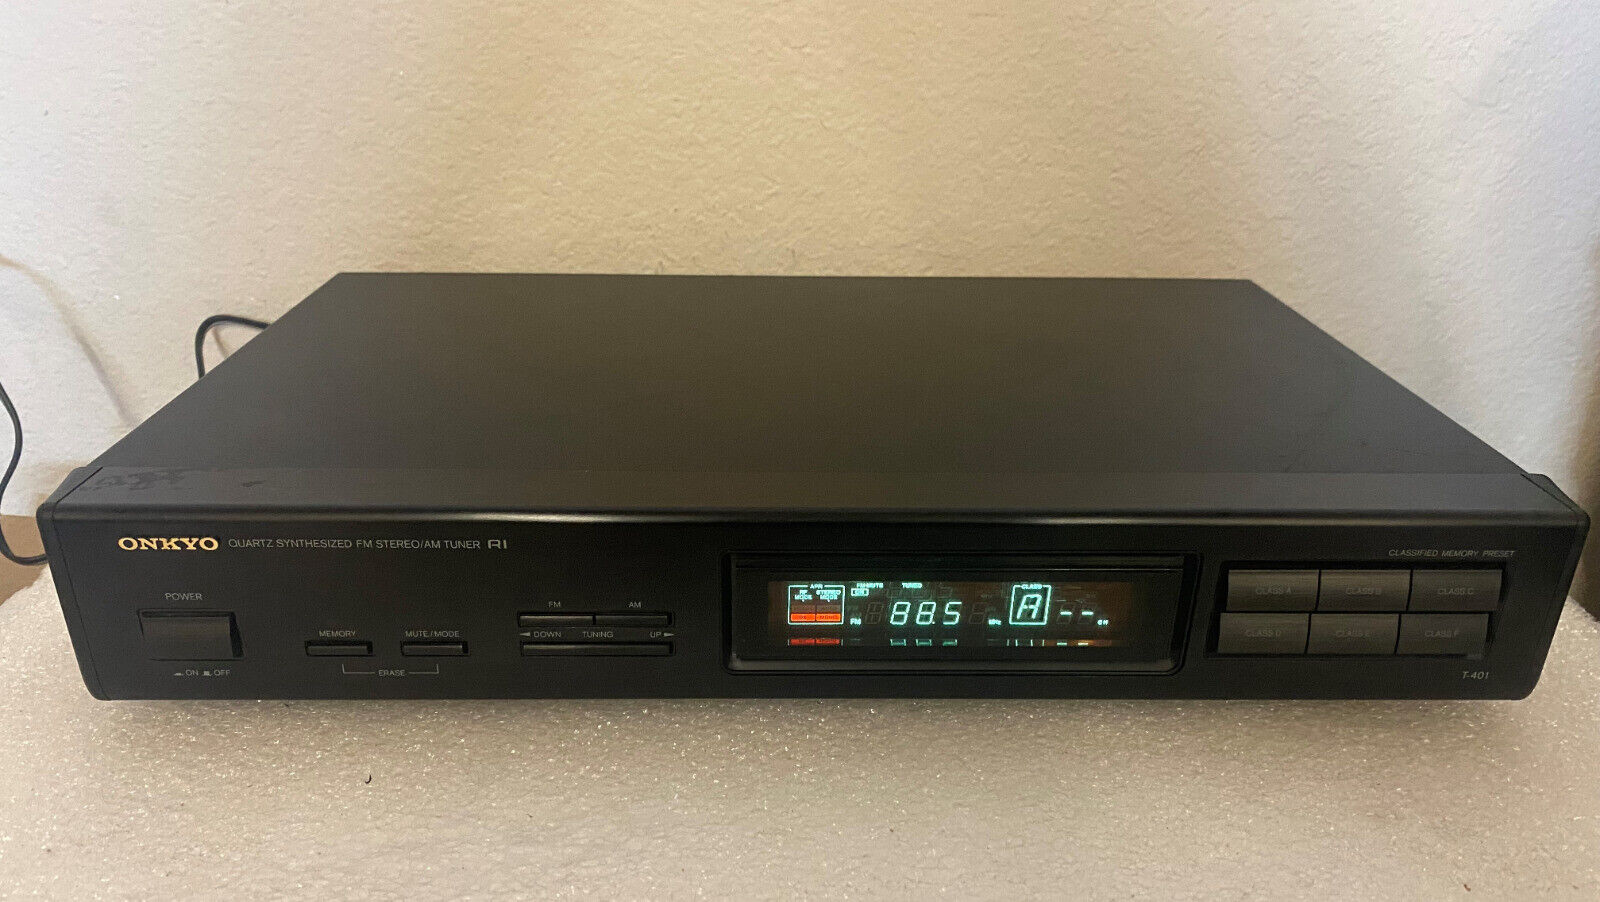 Onkyo T-401 Quartz Synthesized Digital FM Stereo AM Tuner R1